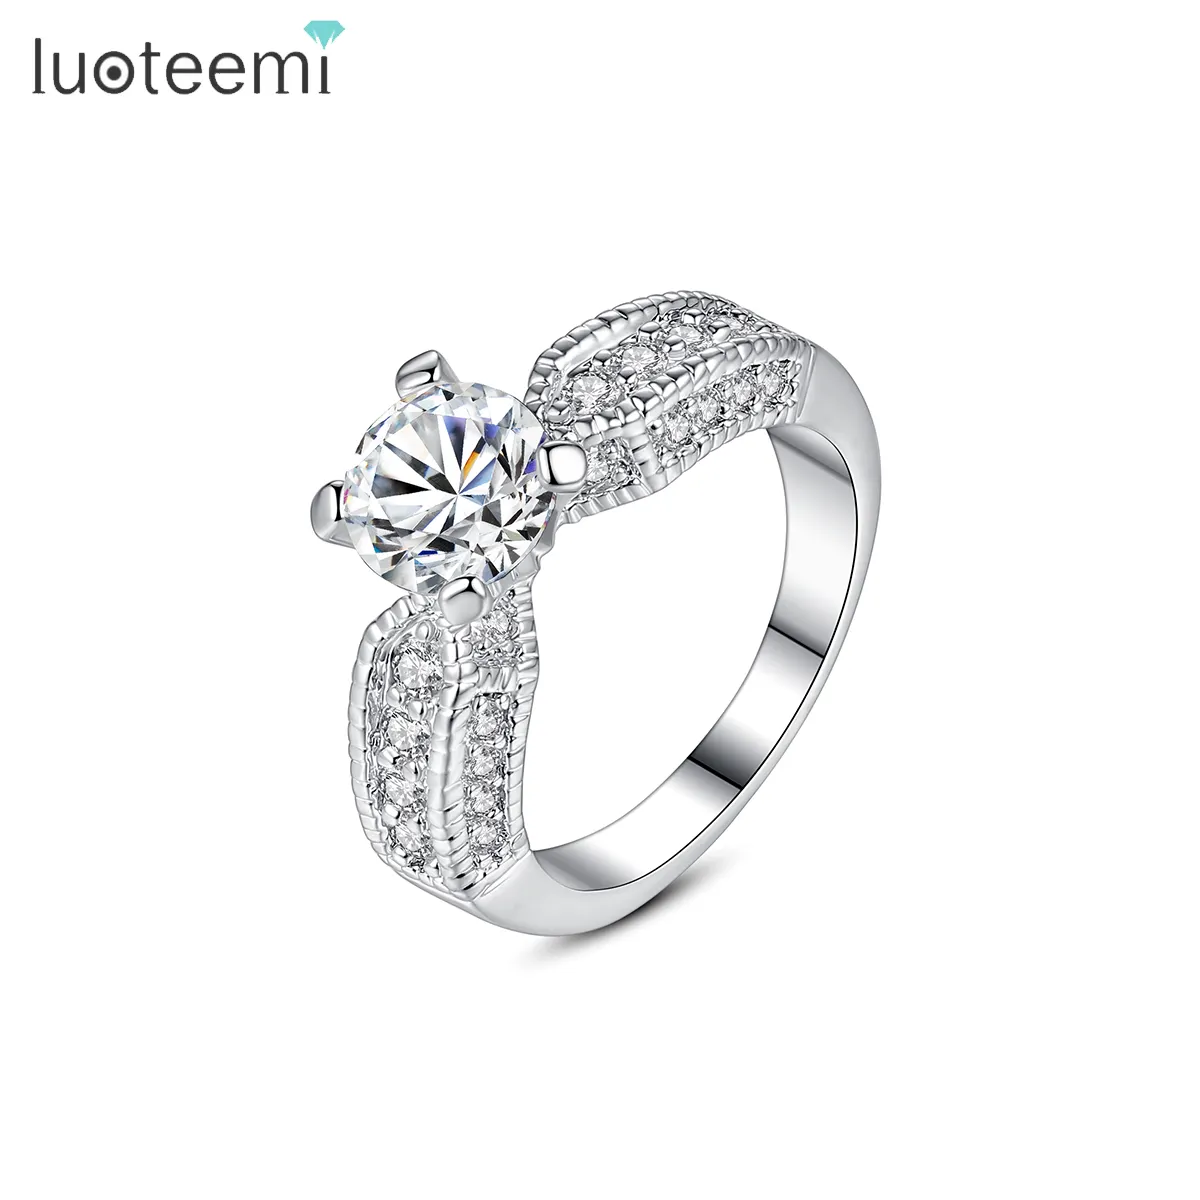 LUOTEEMI New White Gold Diamond Ring Hot Sale Ebay Jewellery Cubic Zirconia Women Wedding Rings